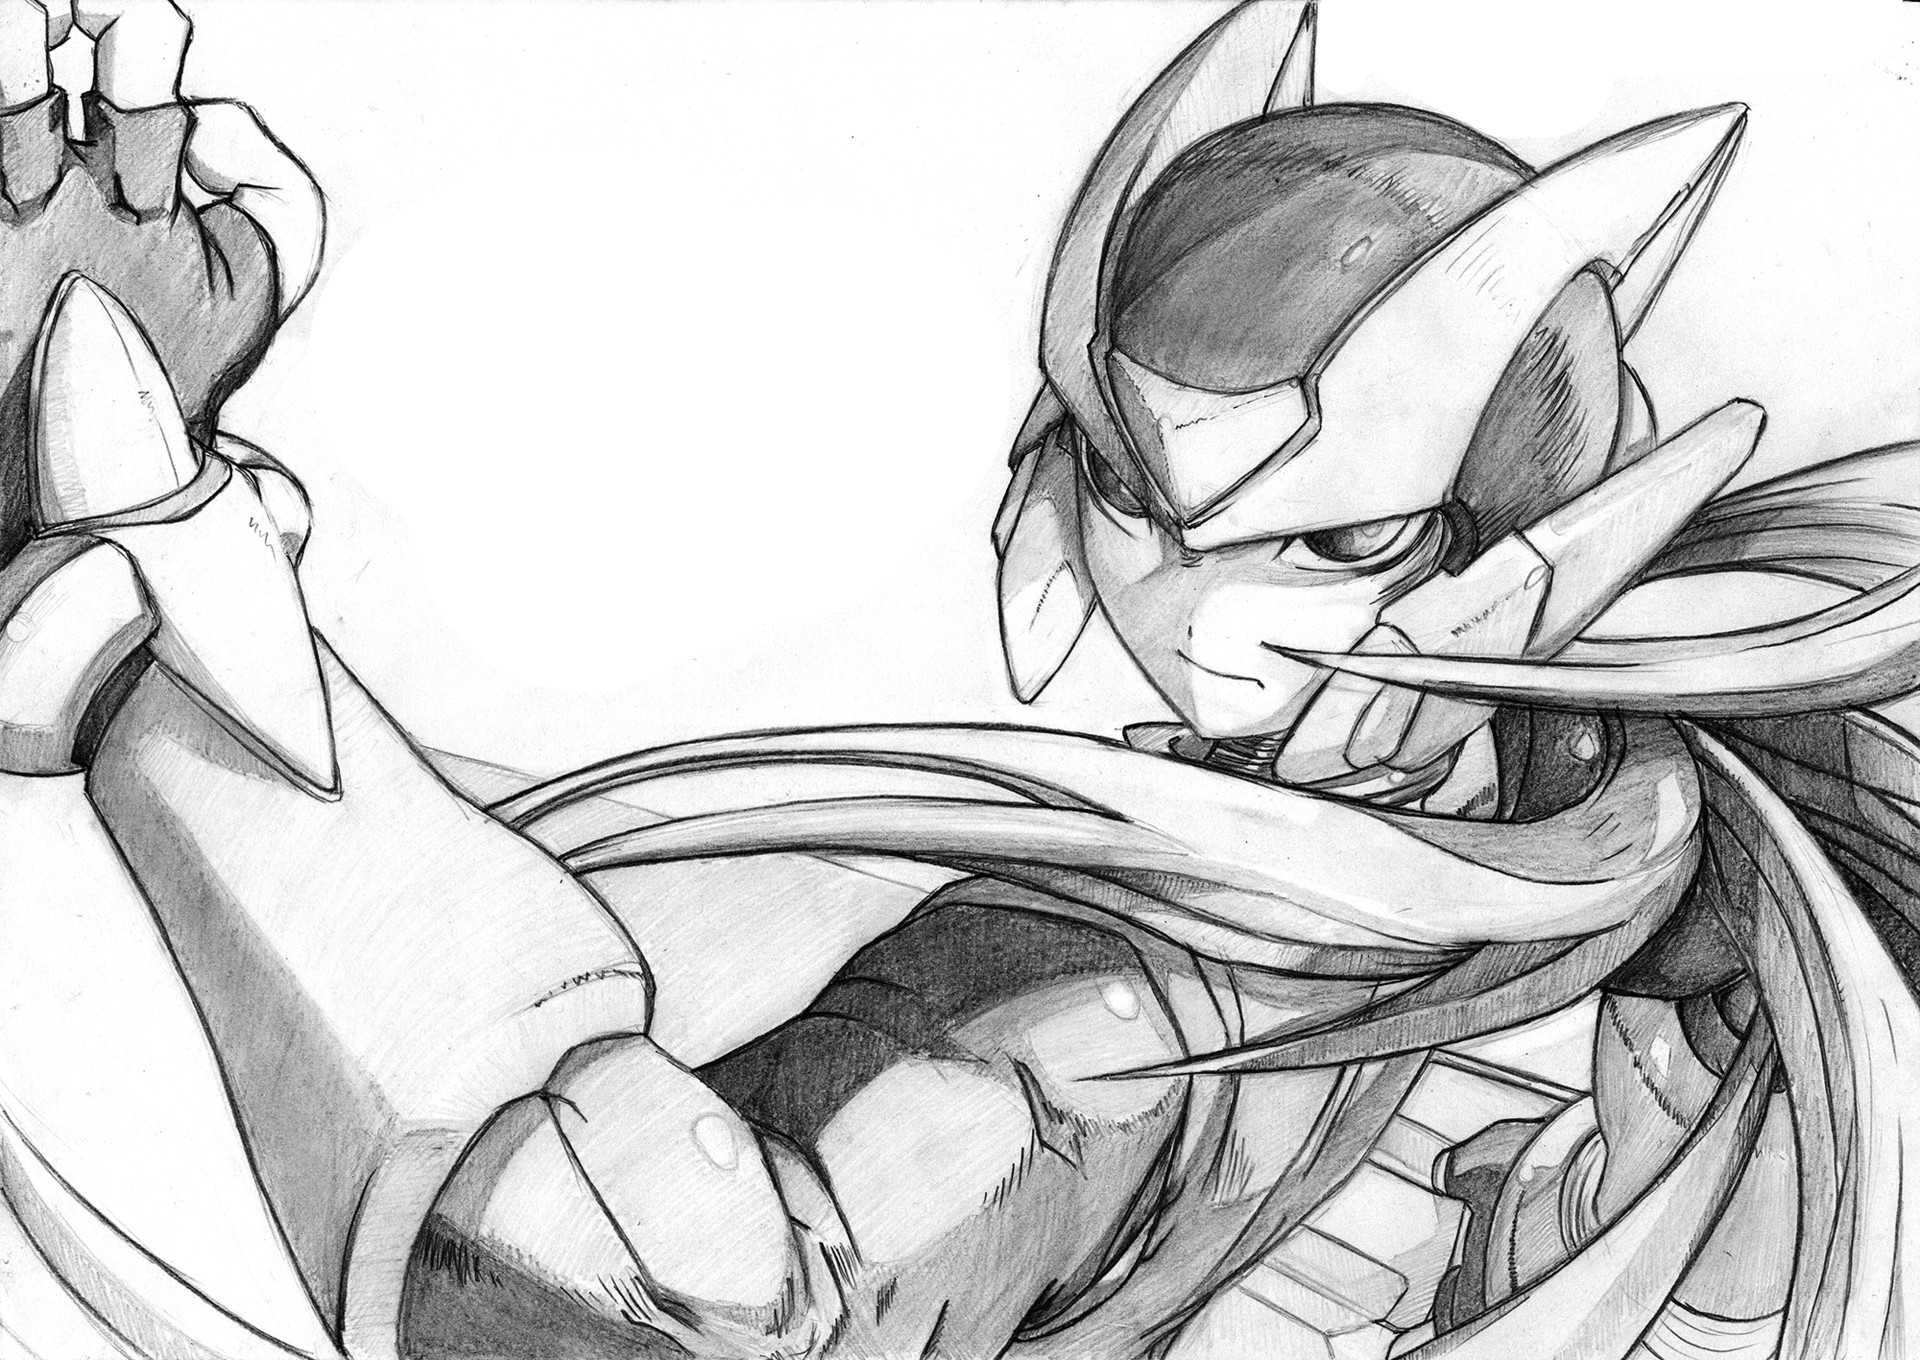 This is from Megaman Zero 4 box art. 